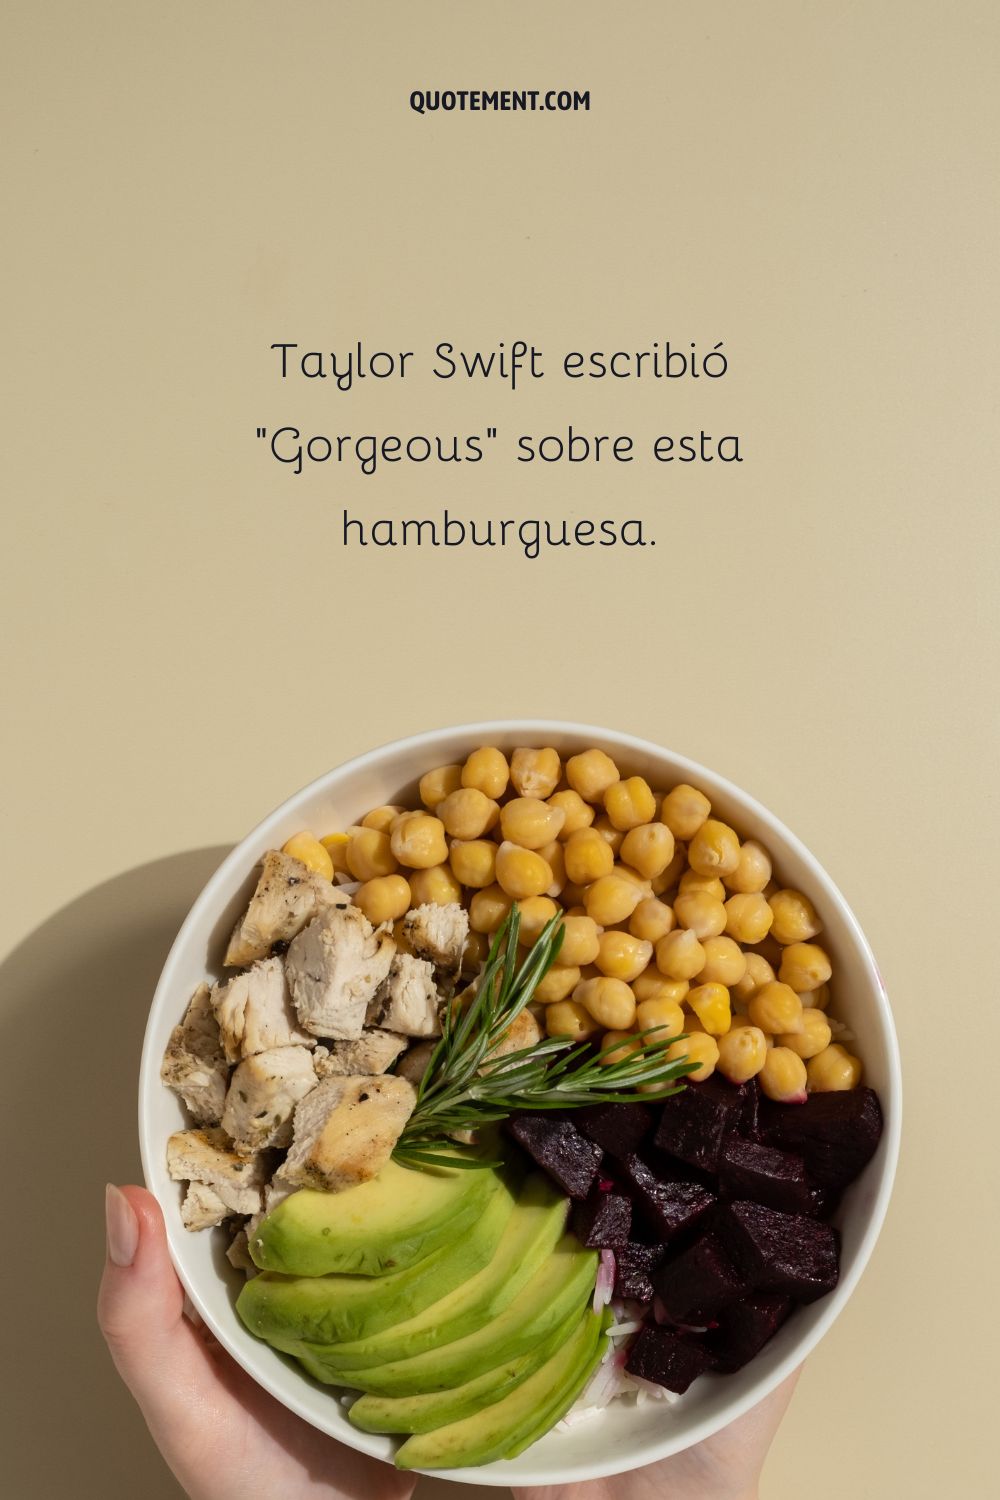 Taylor Swift escribió "Gorgeous" sobre esta hamburguesa.